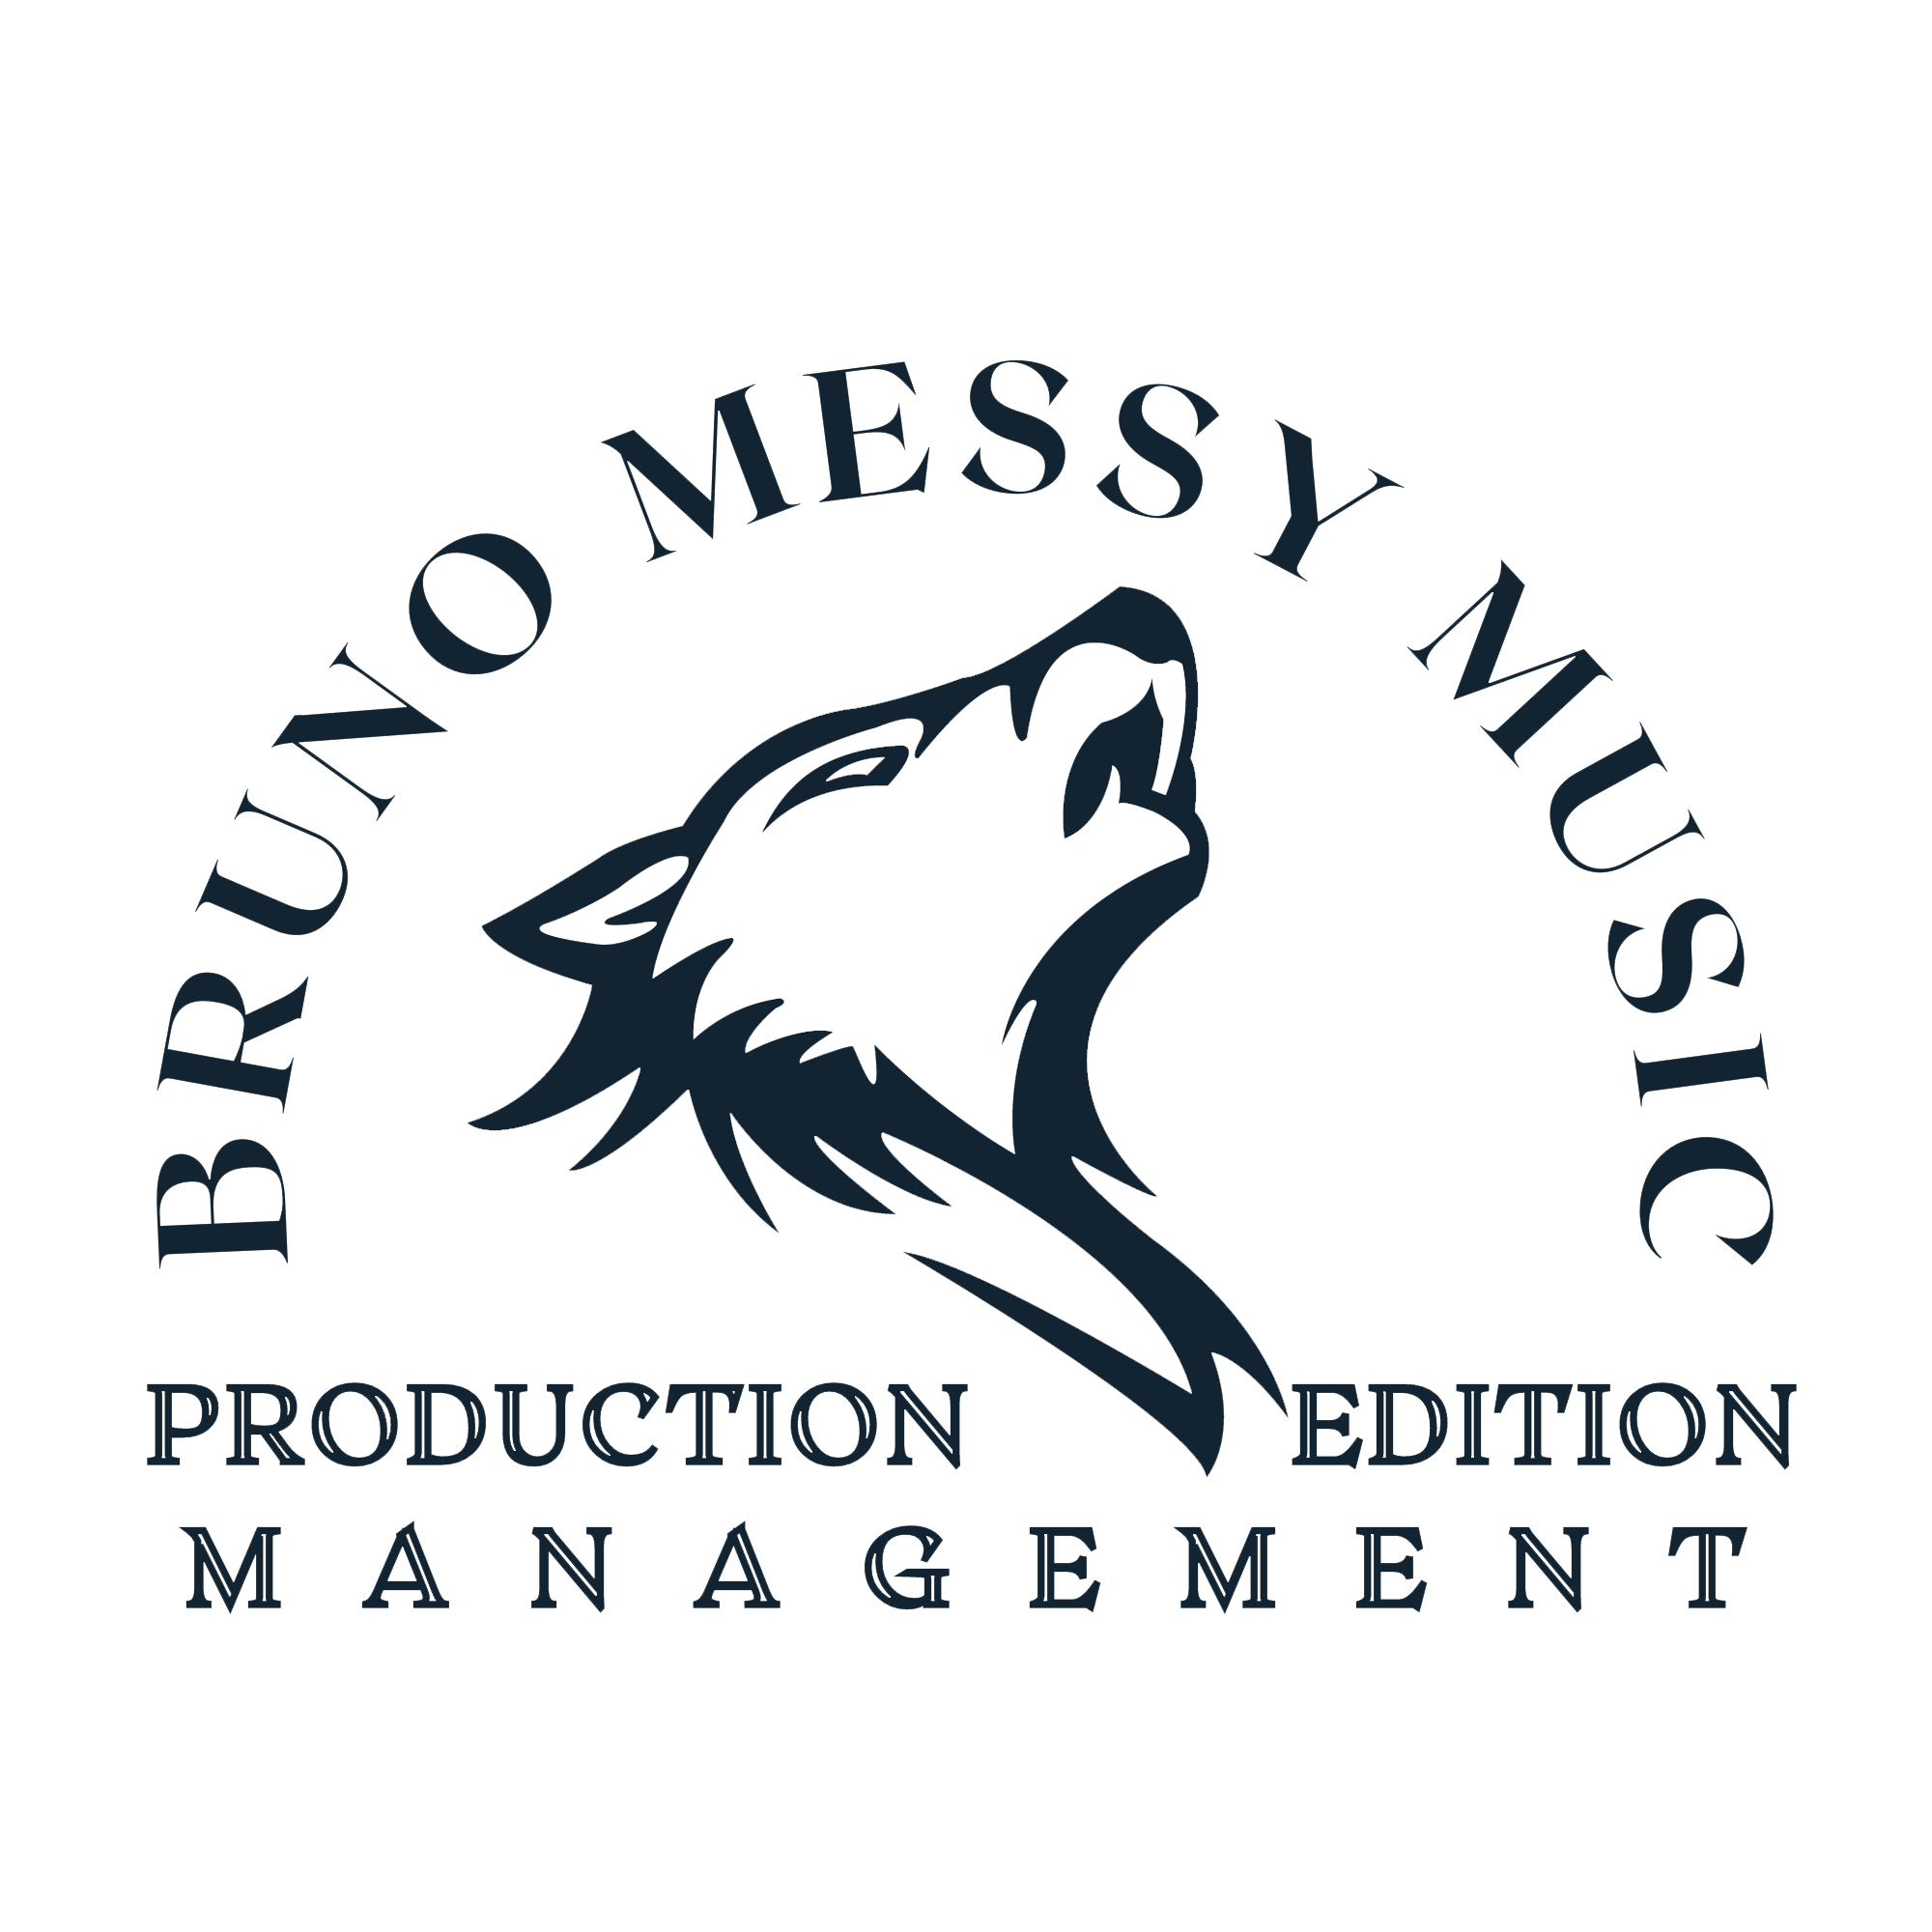 BRUNO MESSY MUSIC